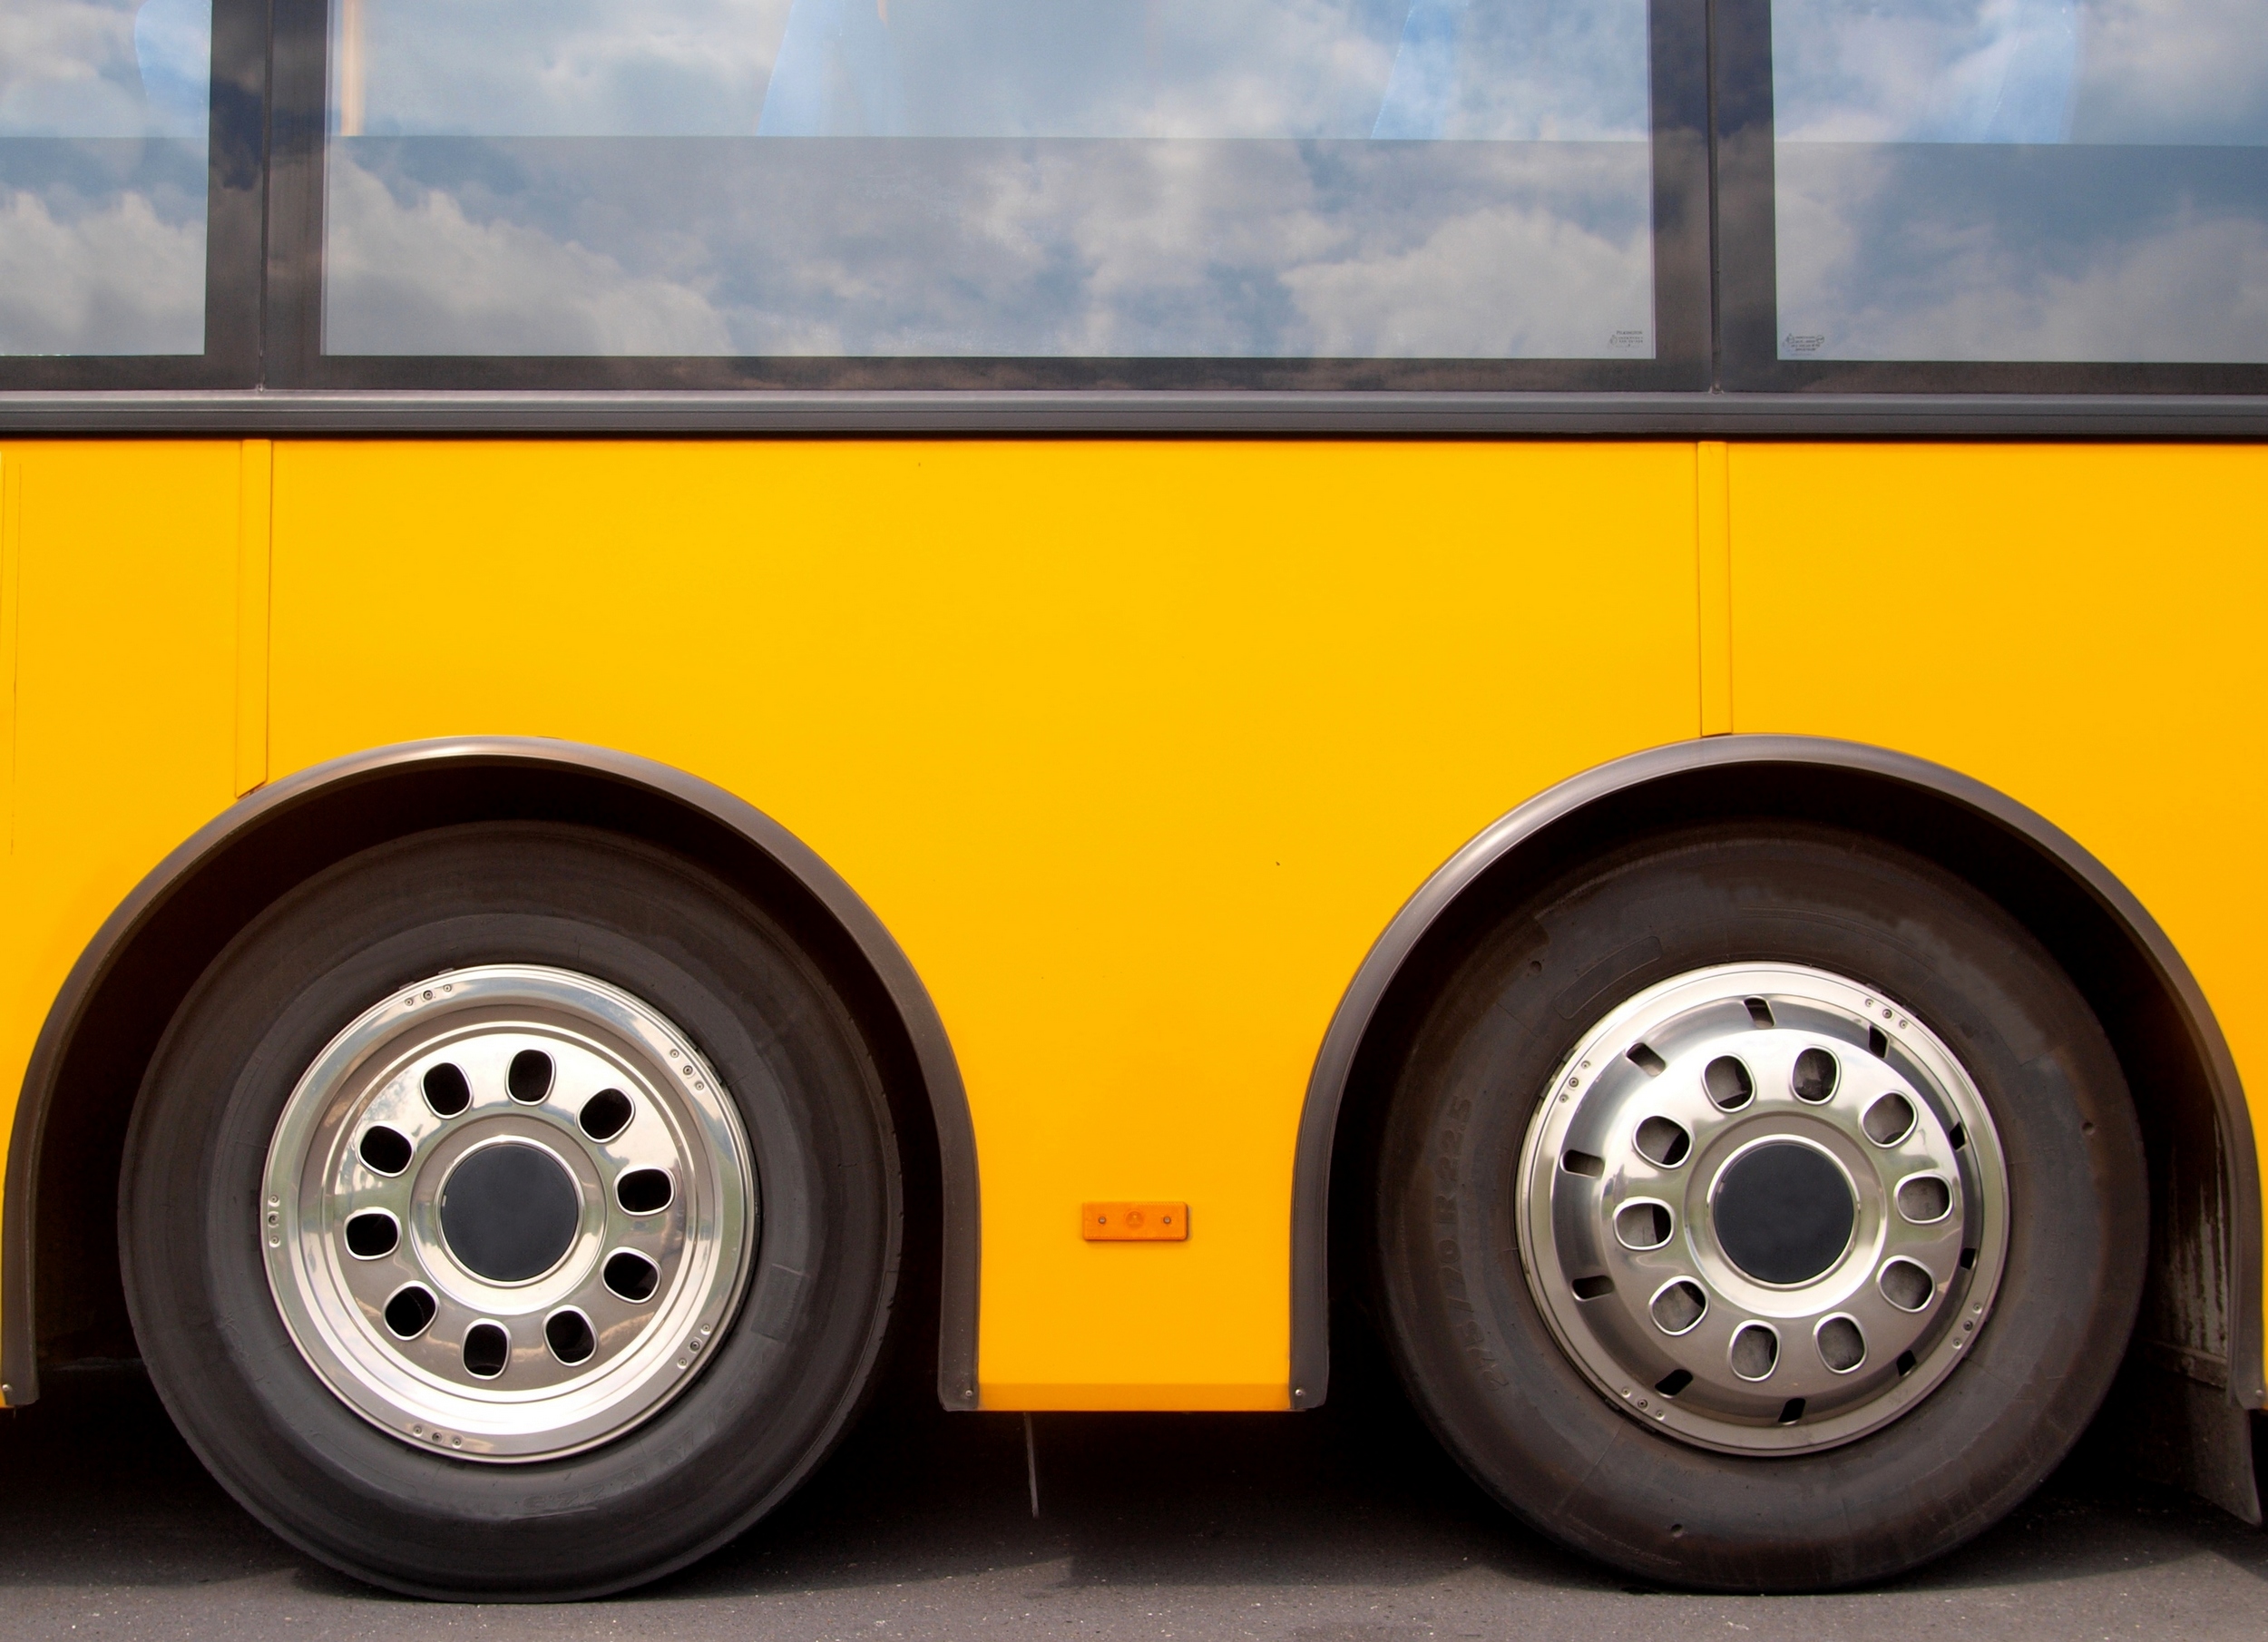 Bus tires